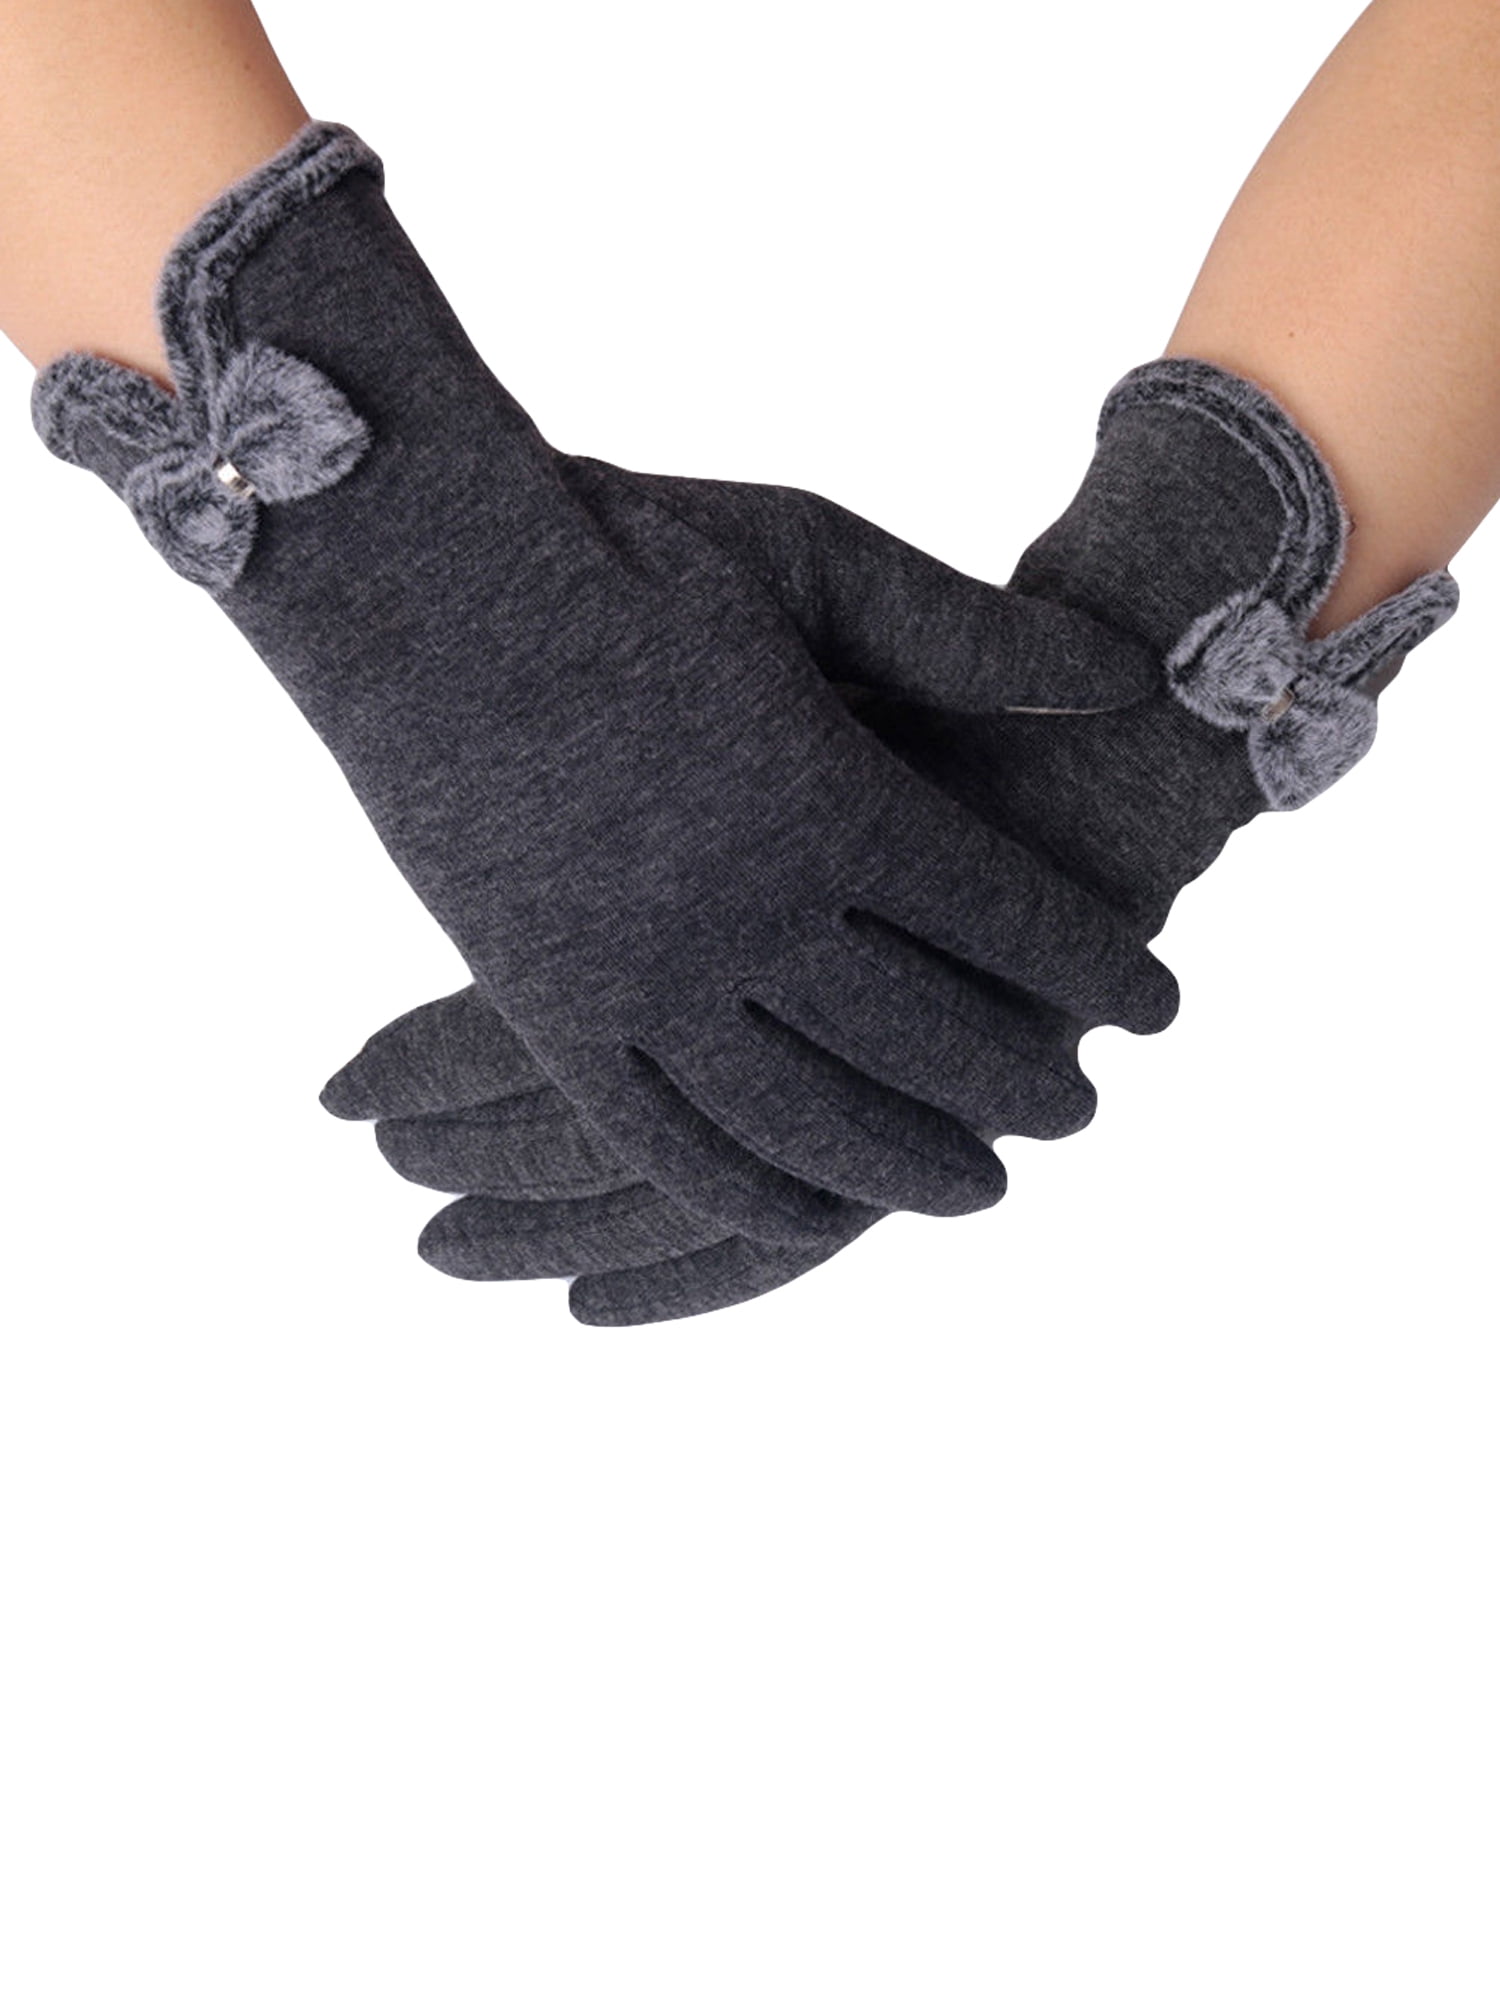 Accessoires Handschoenen & wanten Wanten & handmoffen | Charcoal Wool Gloves, Warm Fleece inside, great winter warmth : 